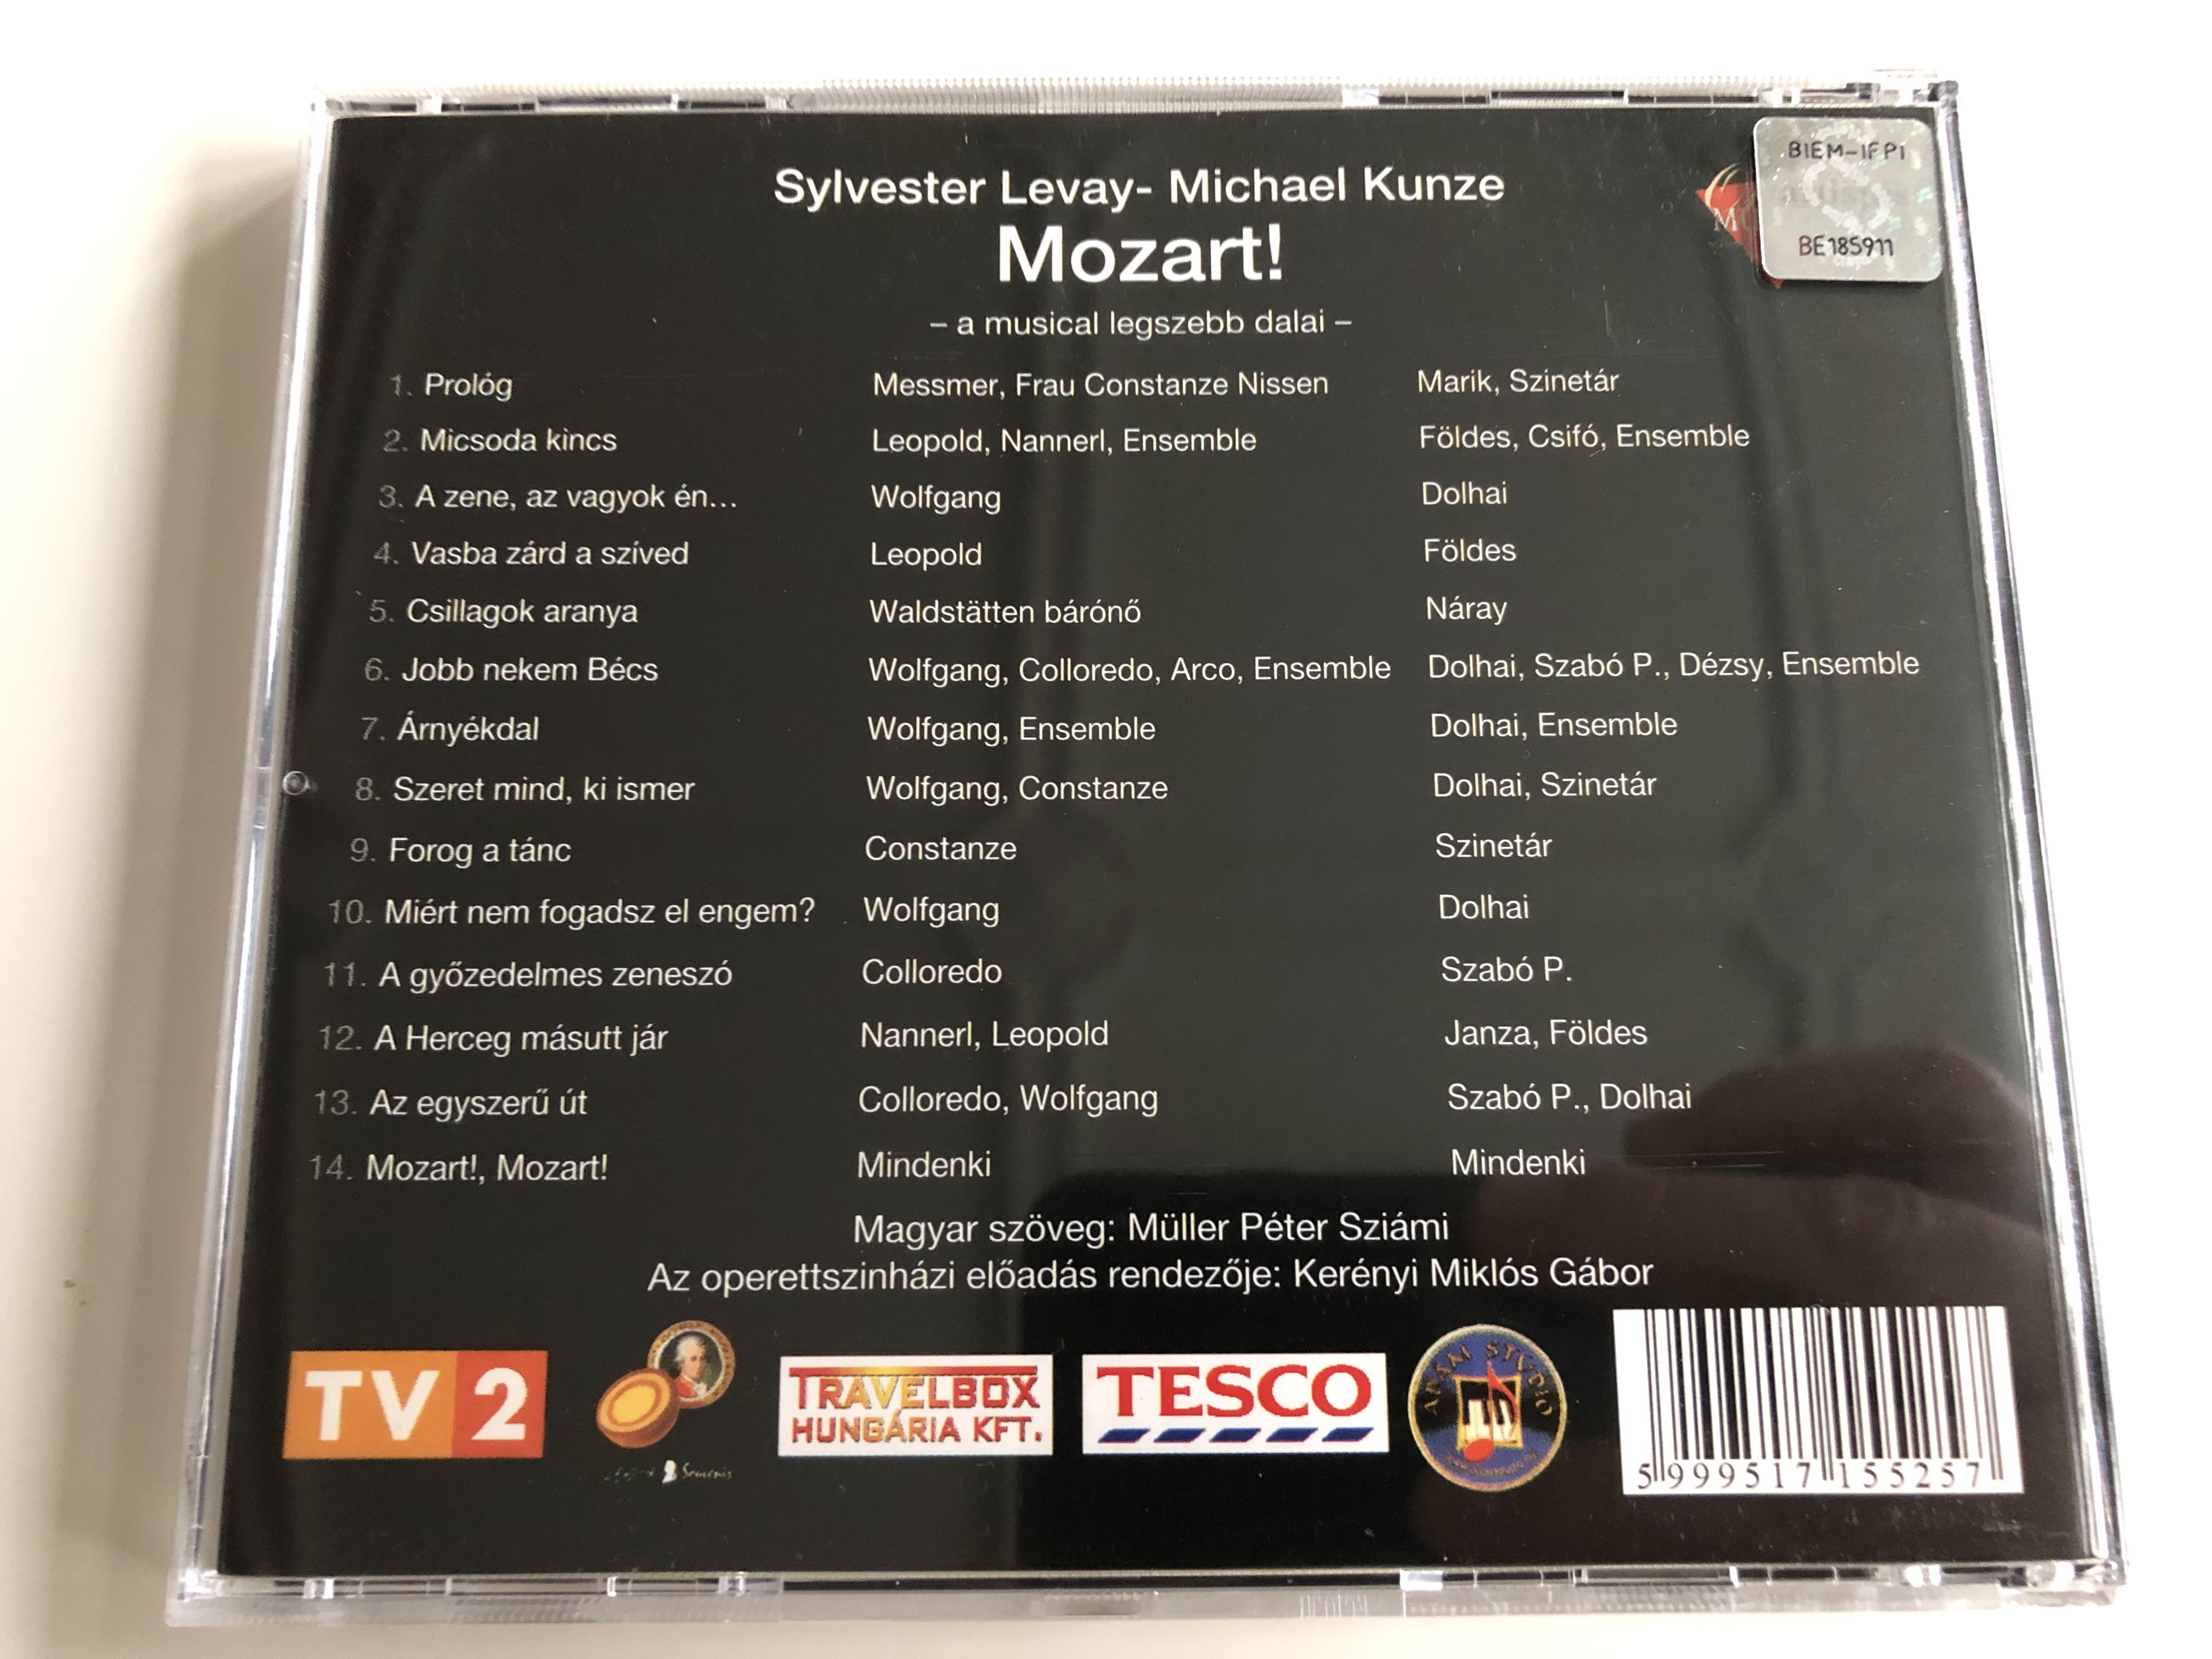 mozart-budapest-sylvester-levay-michael-kunze-budapest-operetta-theater-s-famous-musical-directed-by-ker-nyi-mikl-s-g-bor-audio-cd-2003-hun525-9-.jpg